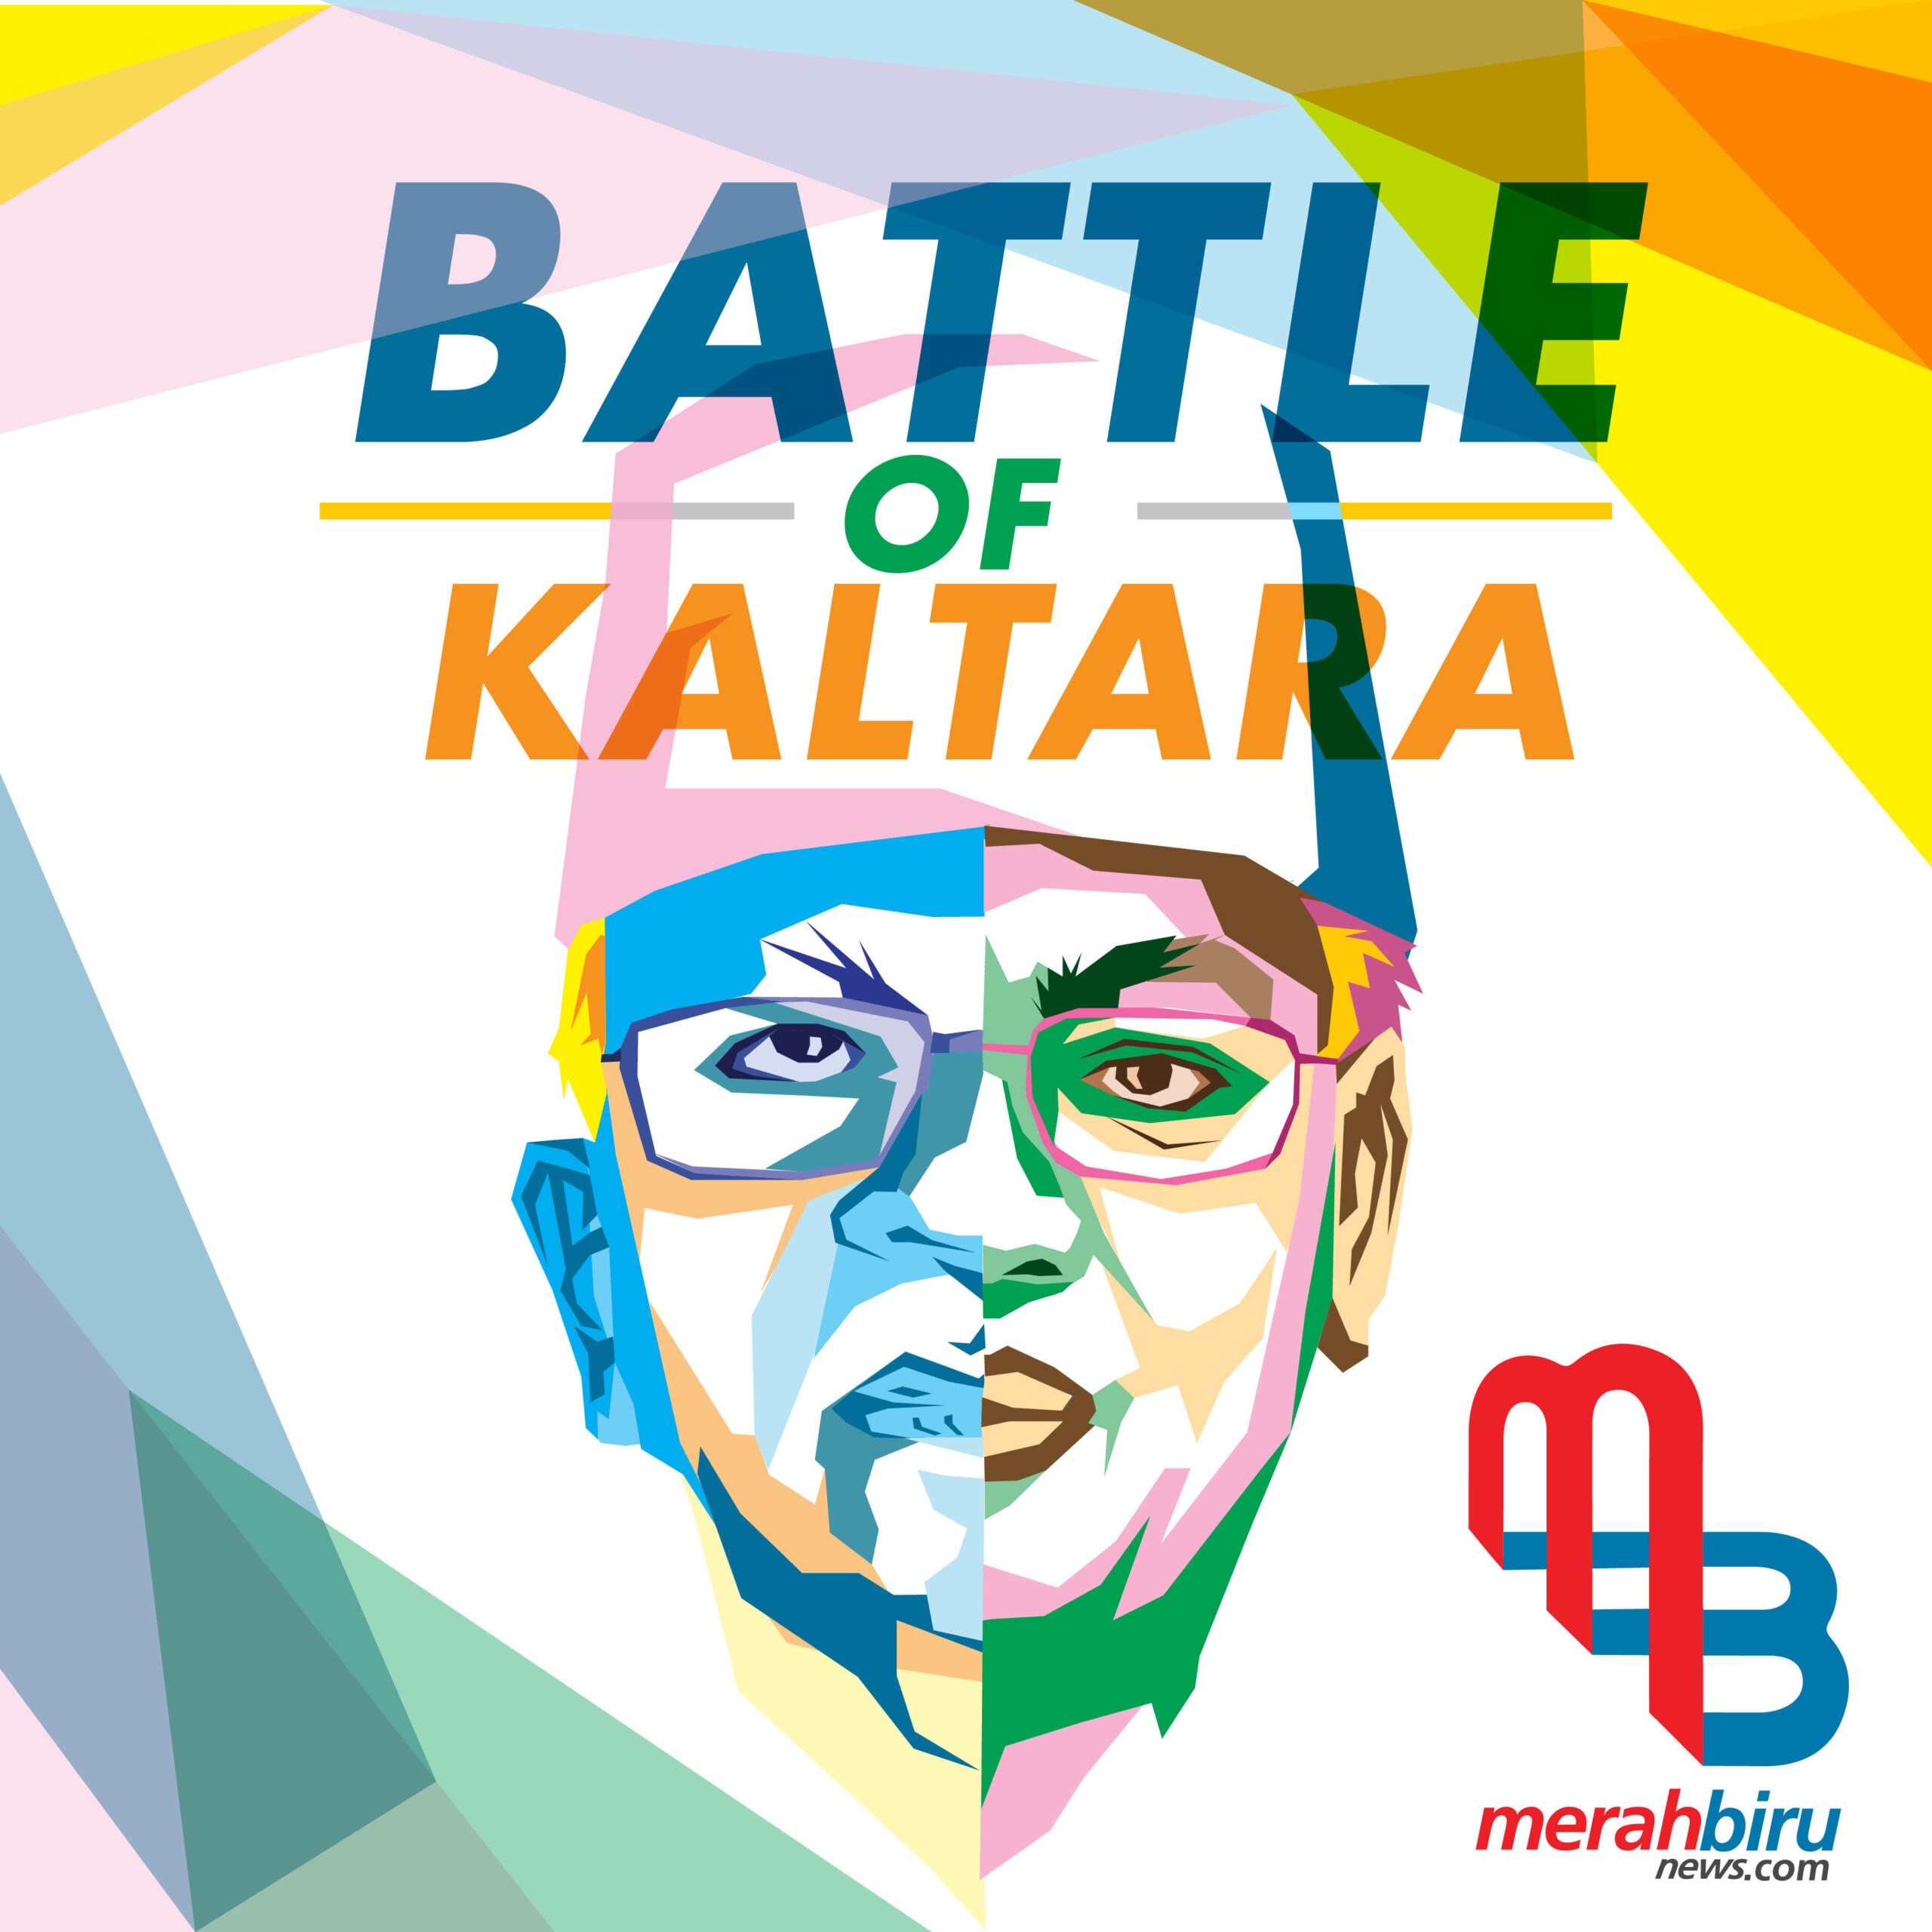 Battle of Kaltara PILGUB